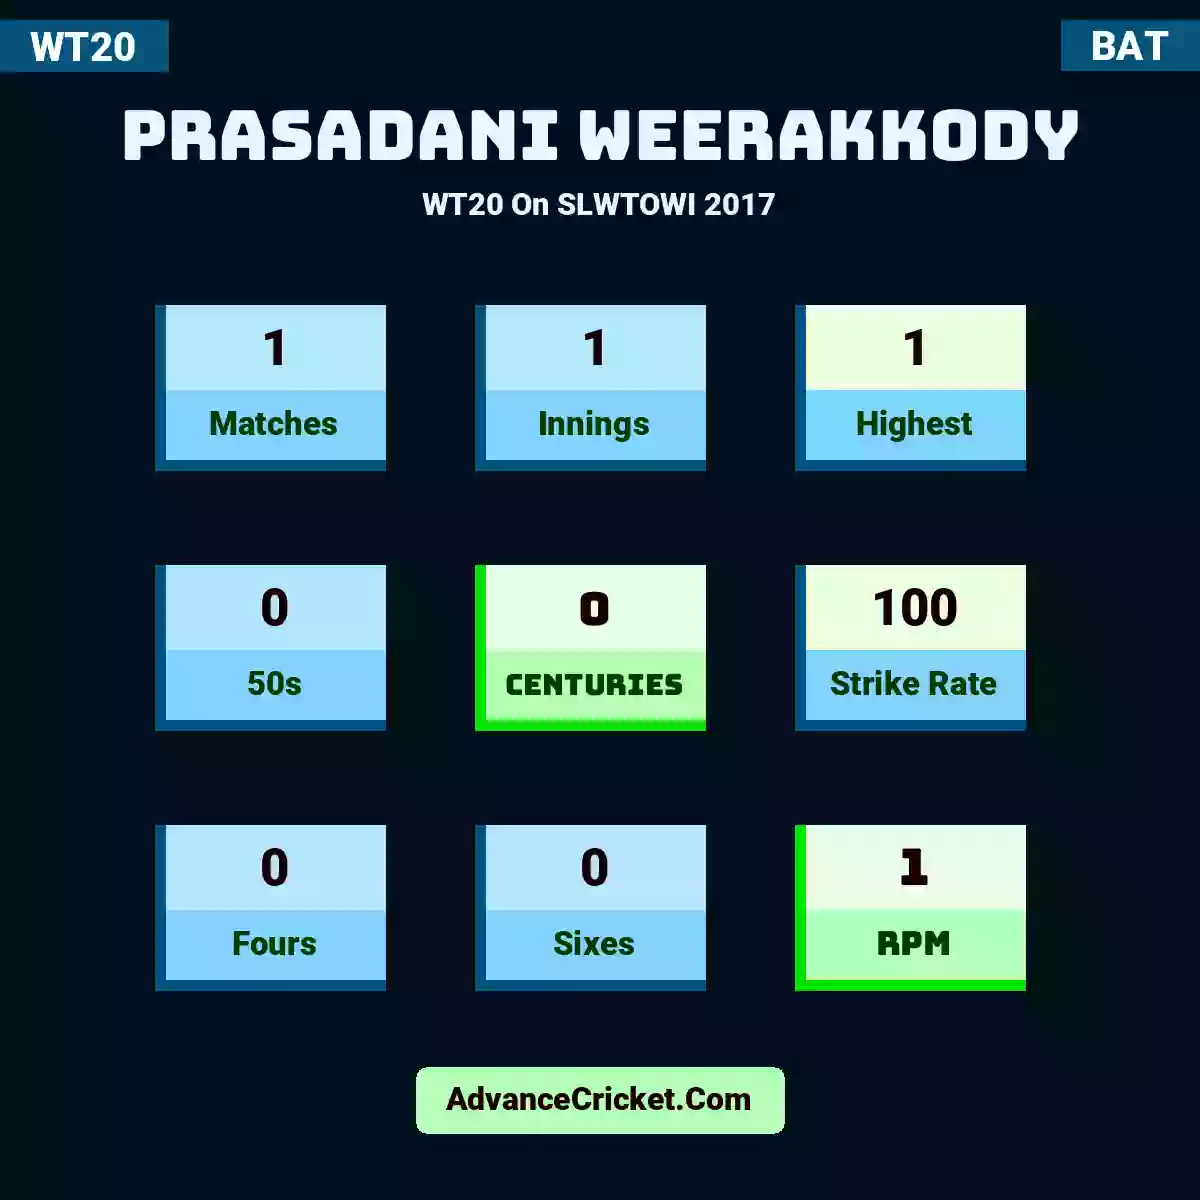 Prasadani Weerakkody WT20  On SLWTOWI 2017, Prasadani Weerakkody played 1 matches, scored 1 runs as highest, 0 half-centuries, and 0 centuries, with a strike rate of 100. P.Weerakkody hit 0 fours and 0 sixes, with an RPM of 1.